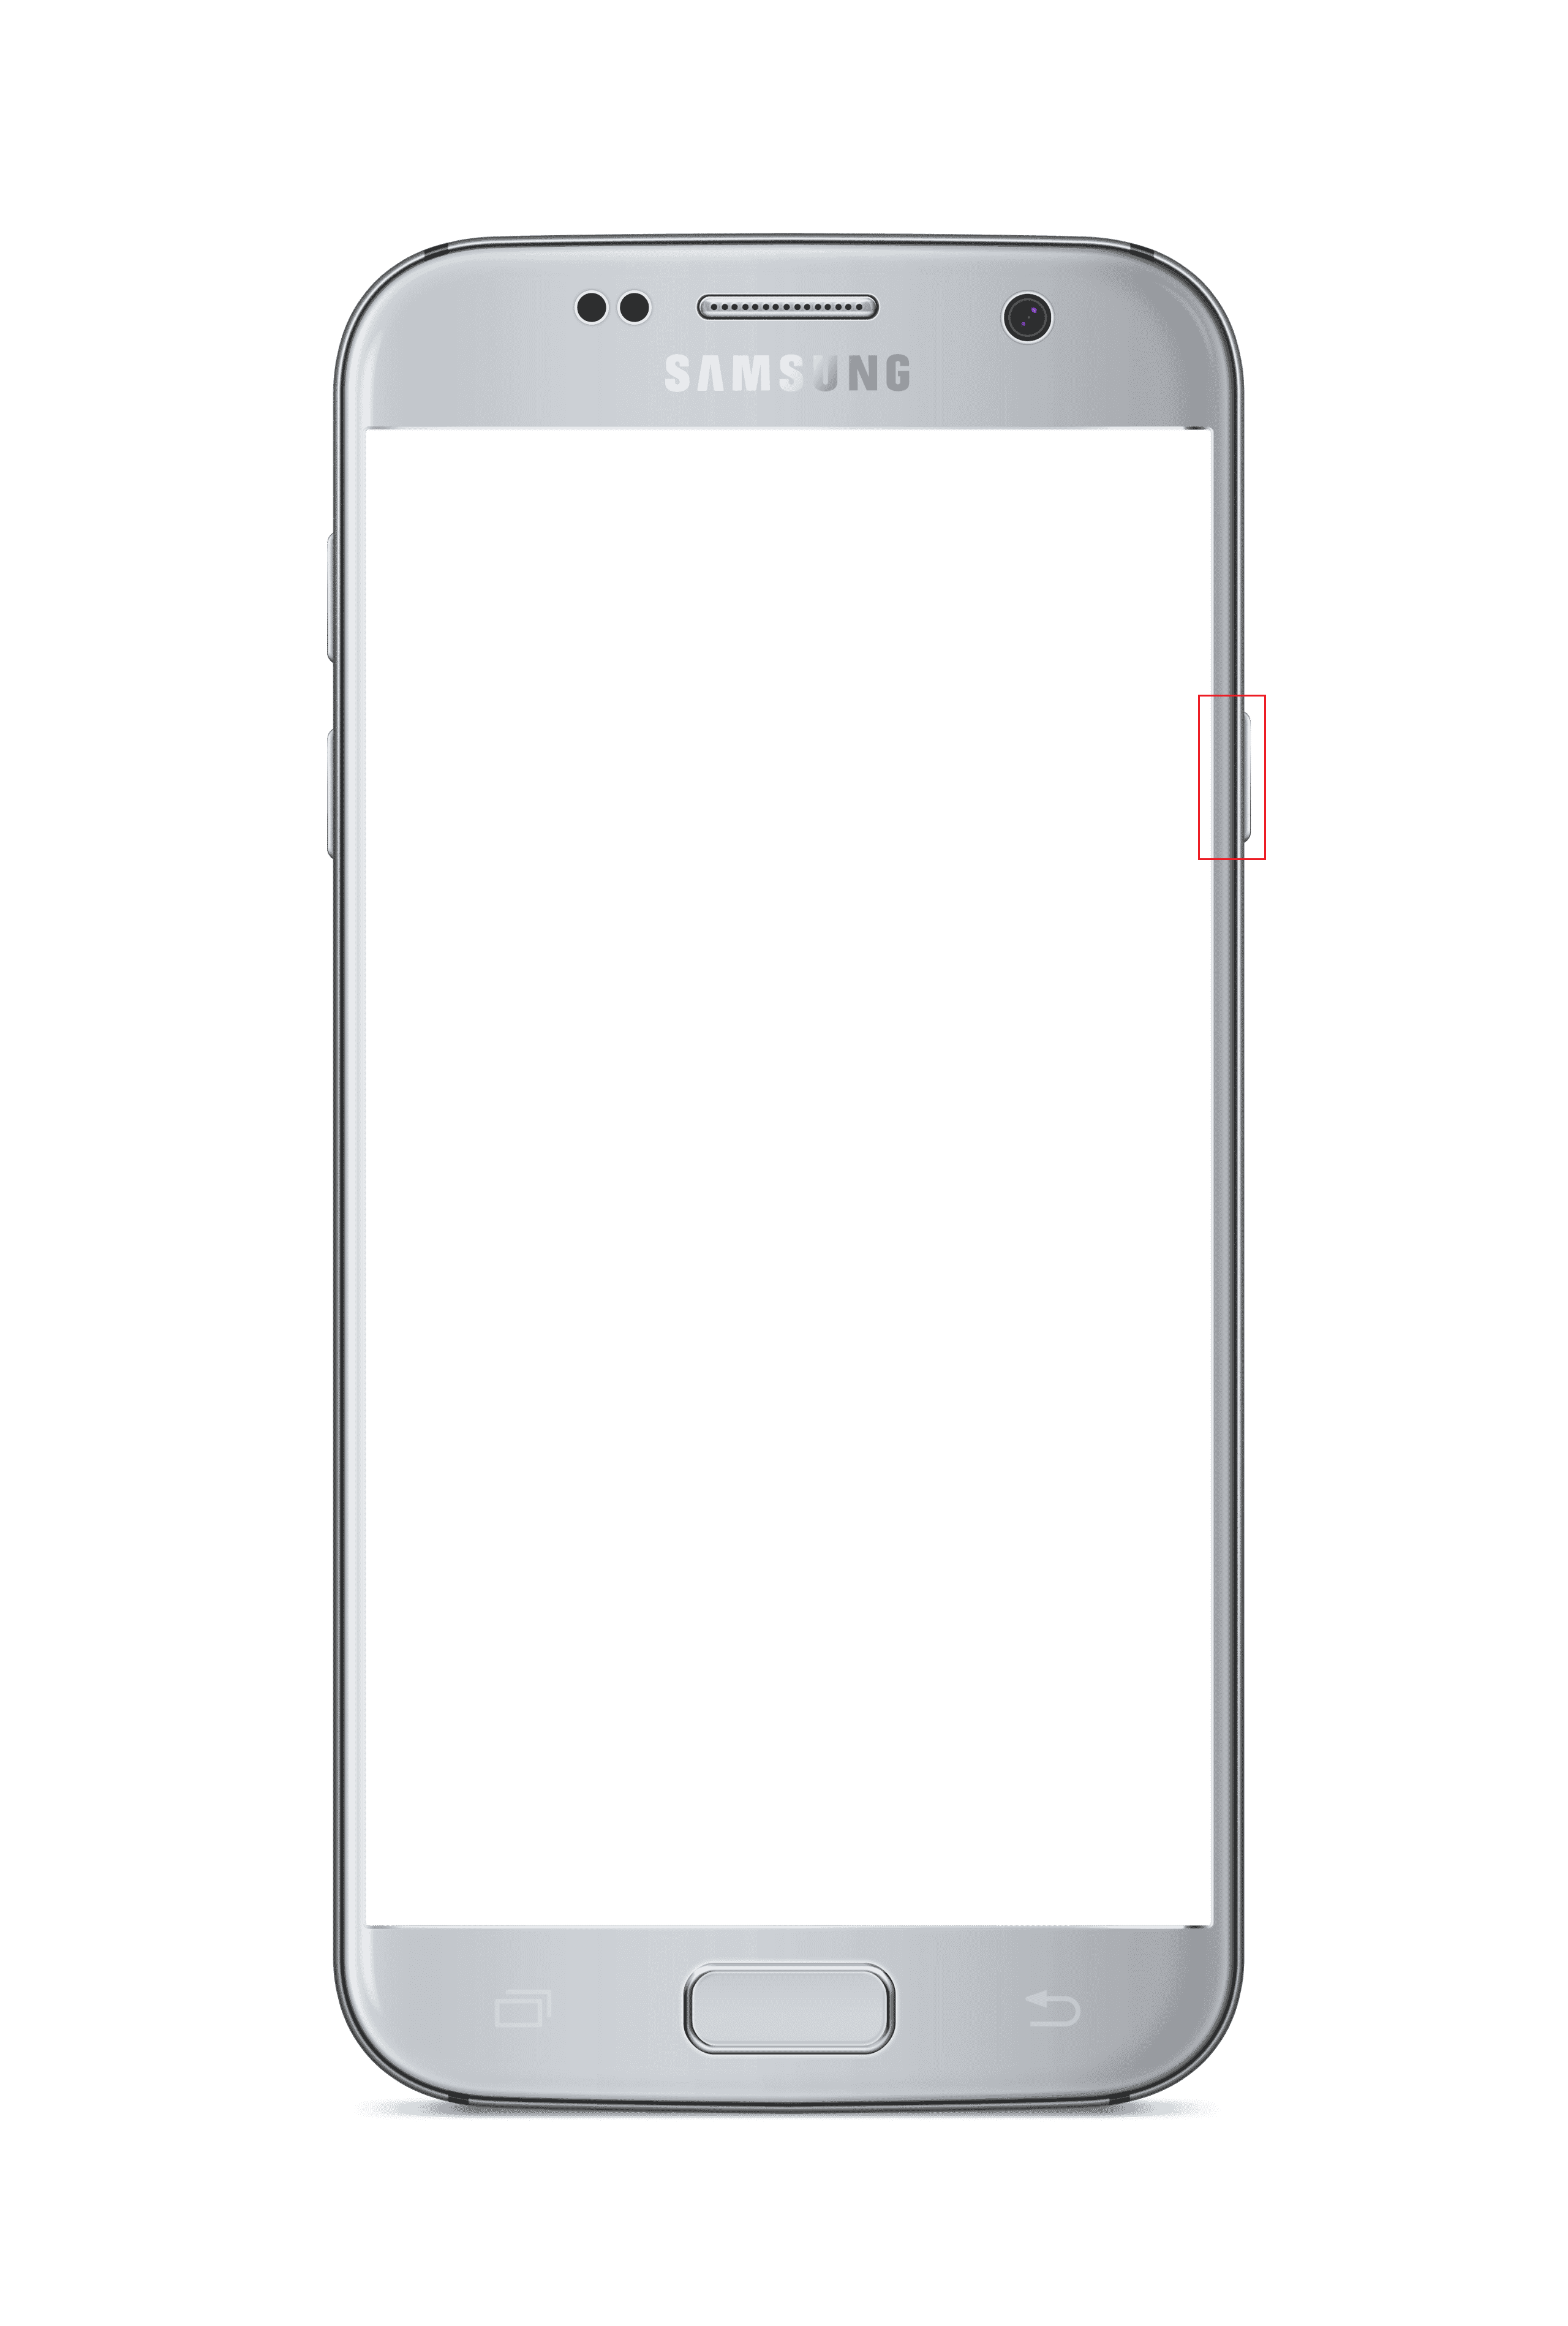 press power button. Fix Galaxy Note 5 SIM Card Error